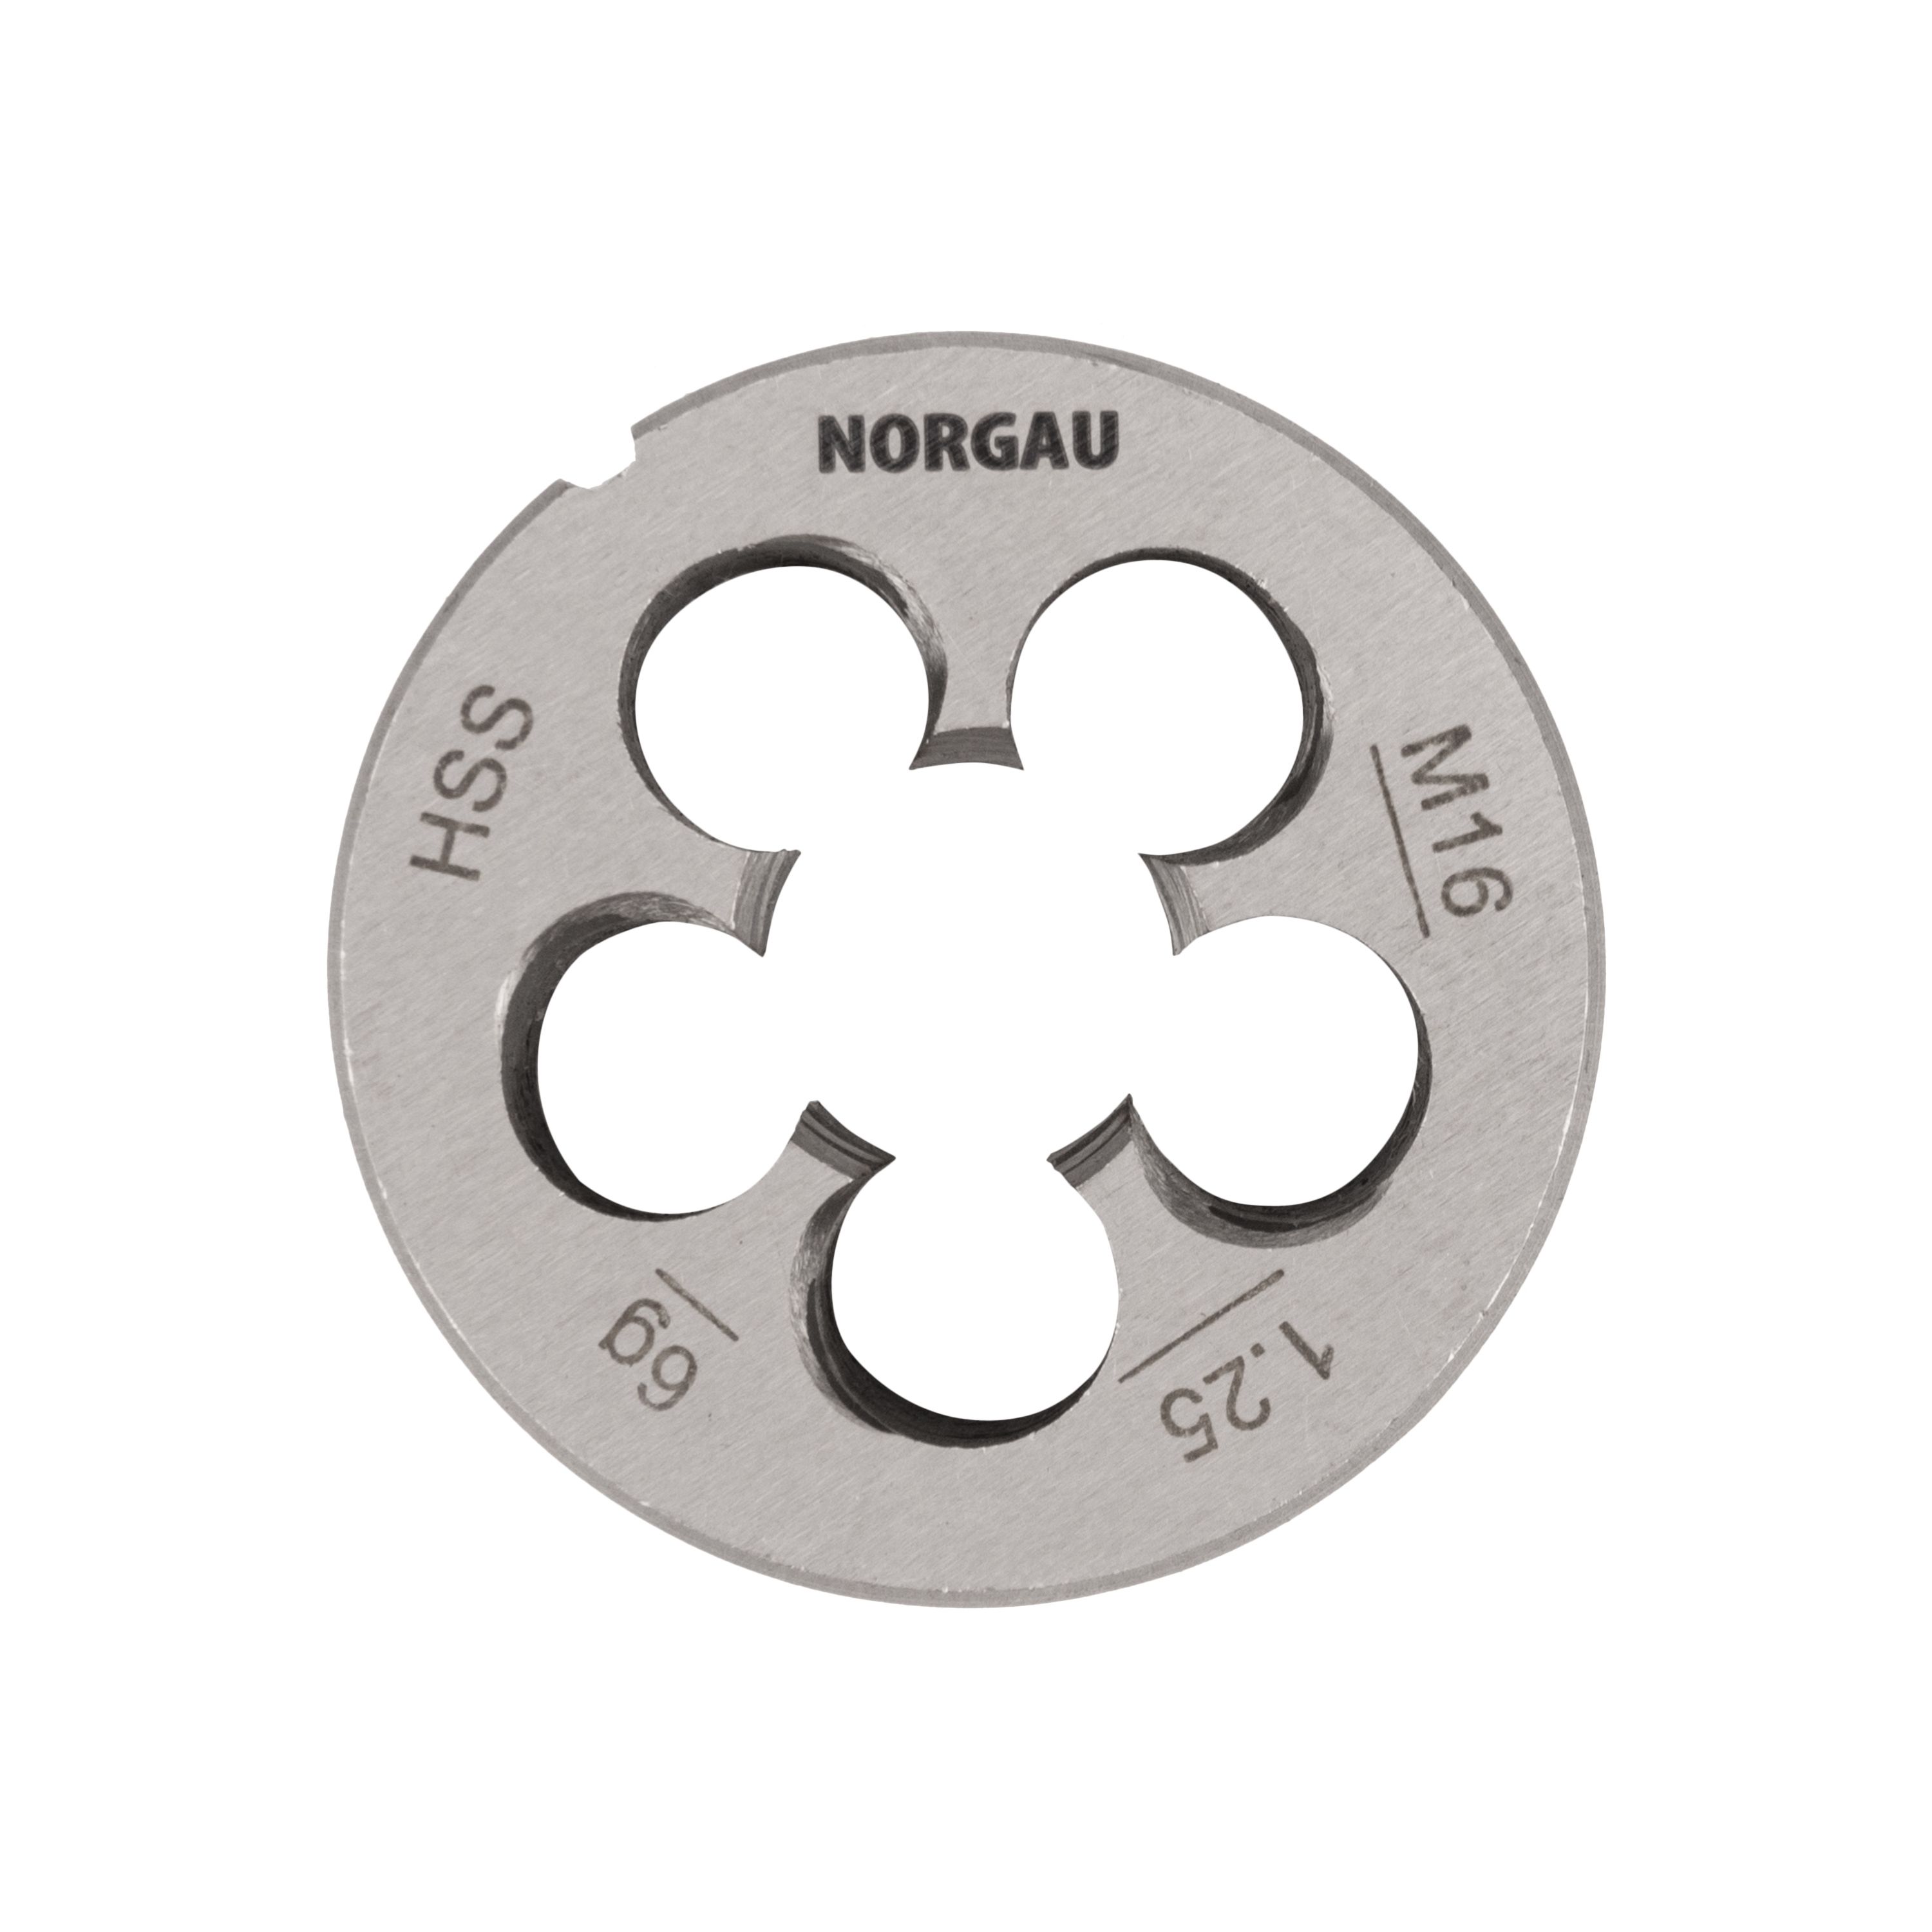 Плашка NORGAU Industrial MF16x1.25х45 мм, метрическая, угол 60°, по DIN223, HSS плашка м30х3 5 мм norgau industrial метрическая угол 60° по din223 hss